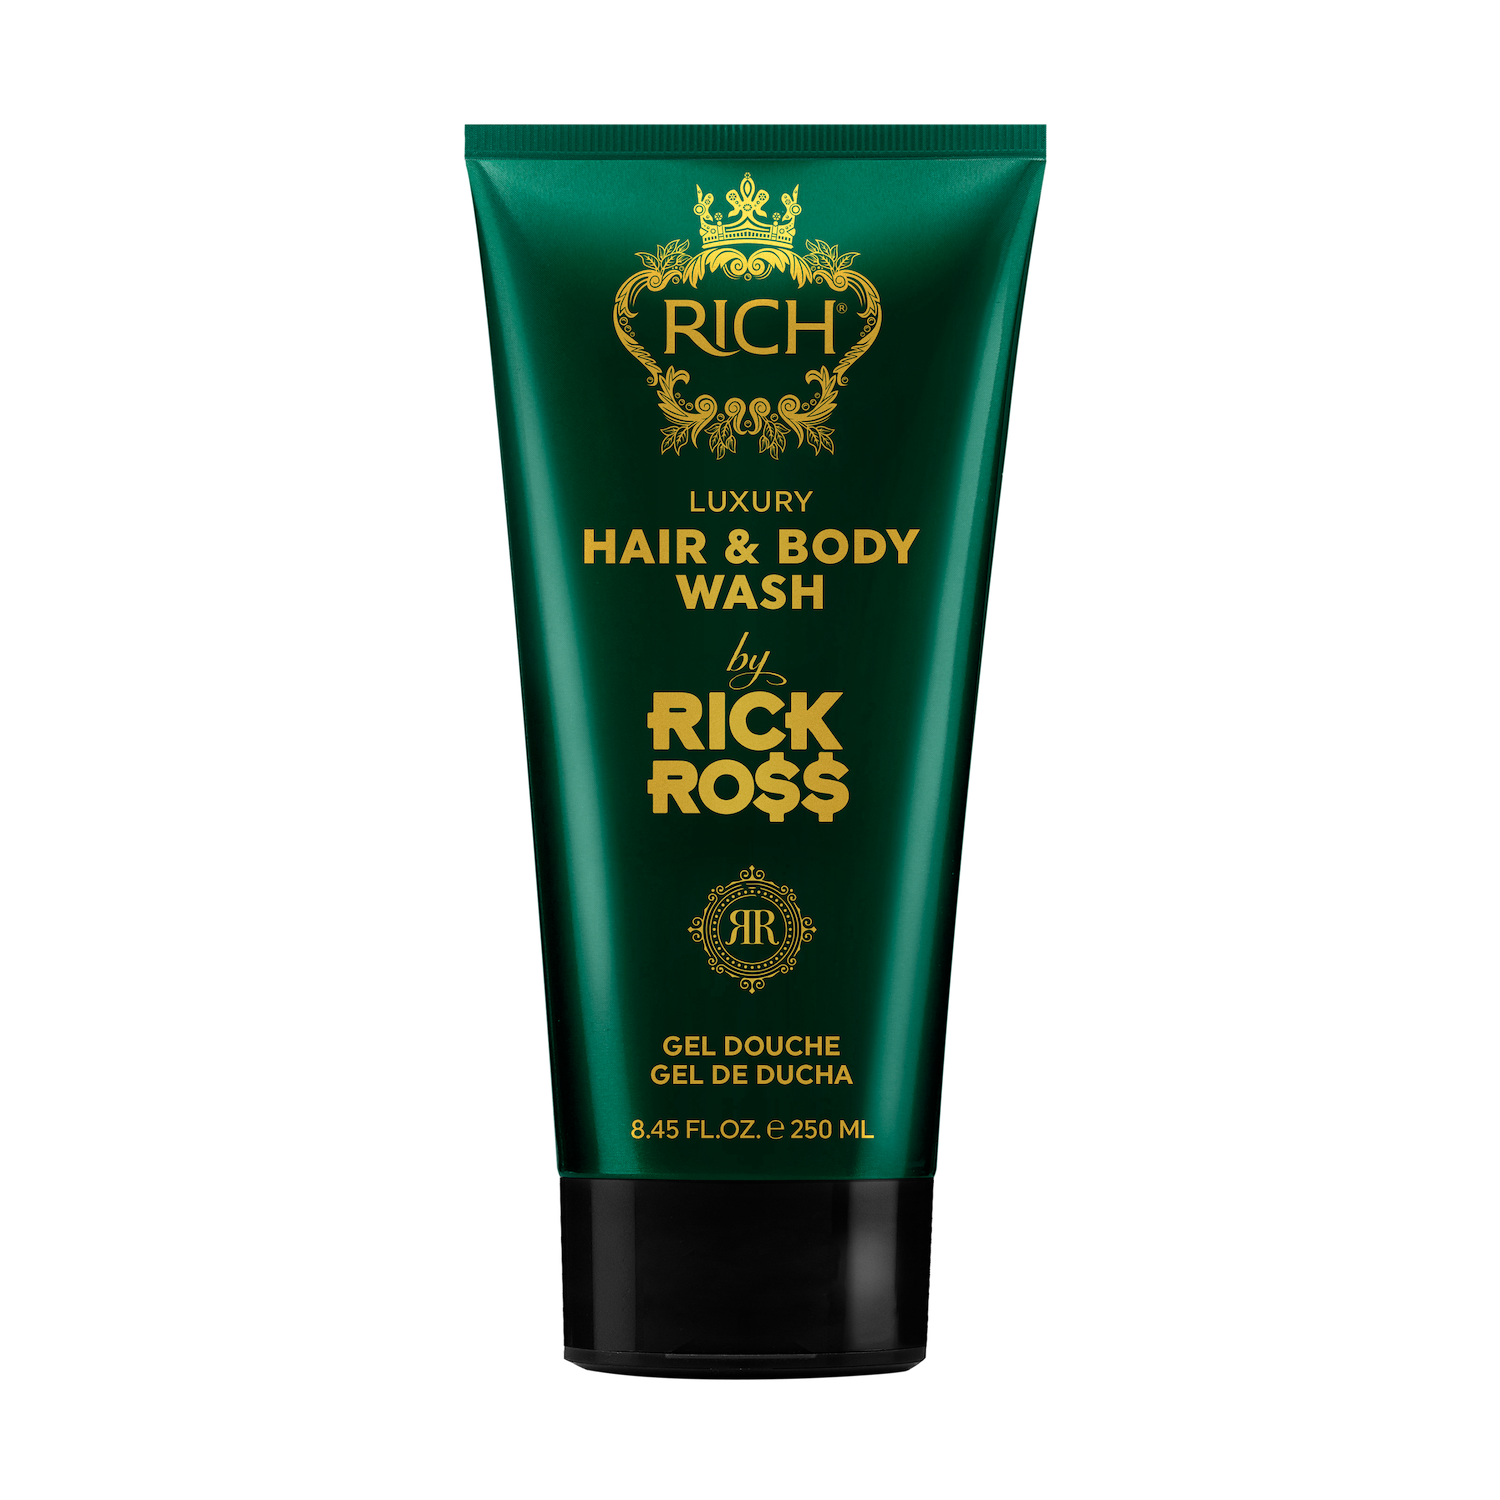 RICH by RICK ROSS LUXURY HAIR & BODY WASH, 8 FL OZ - image 1 of 6